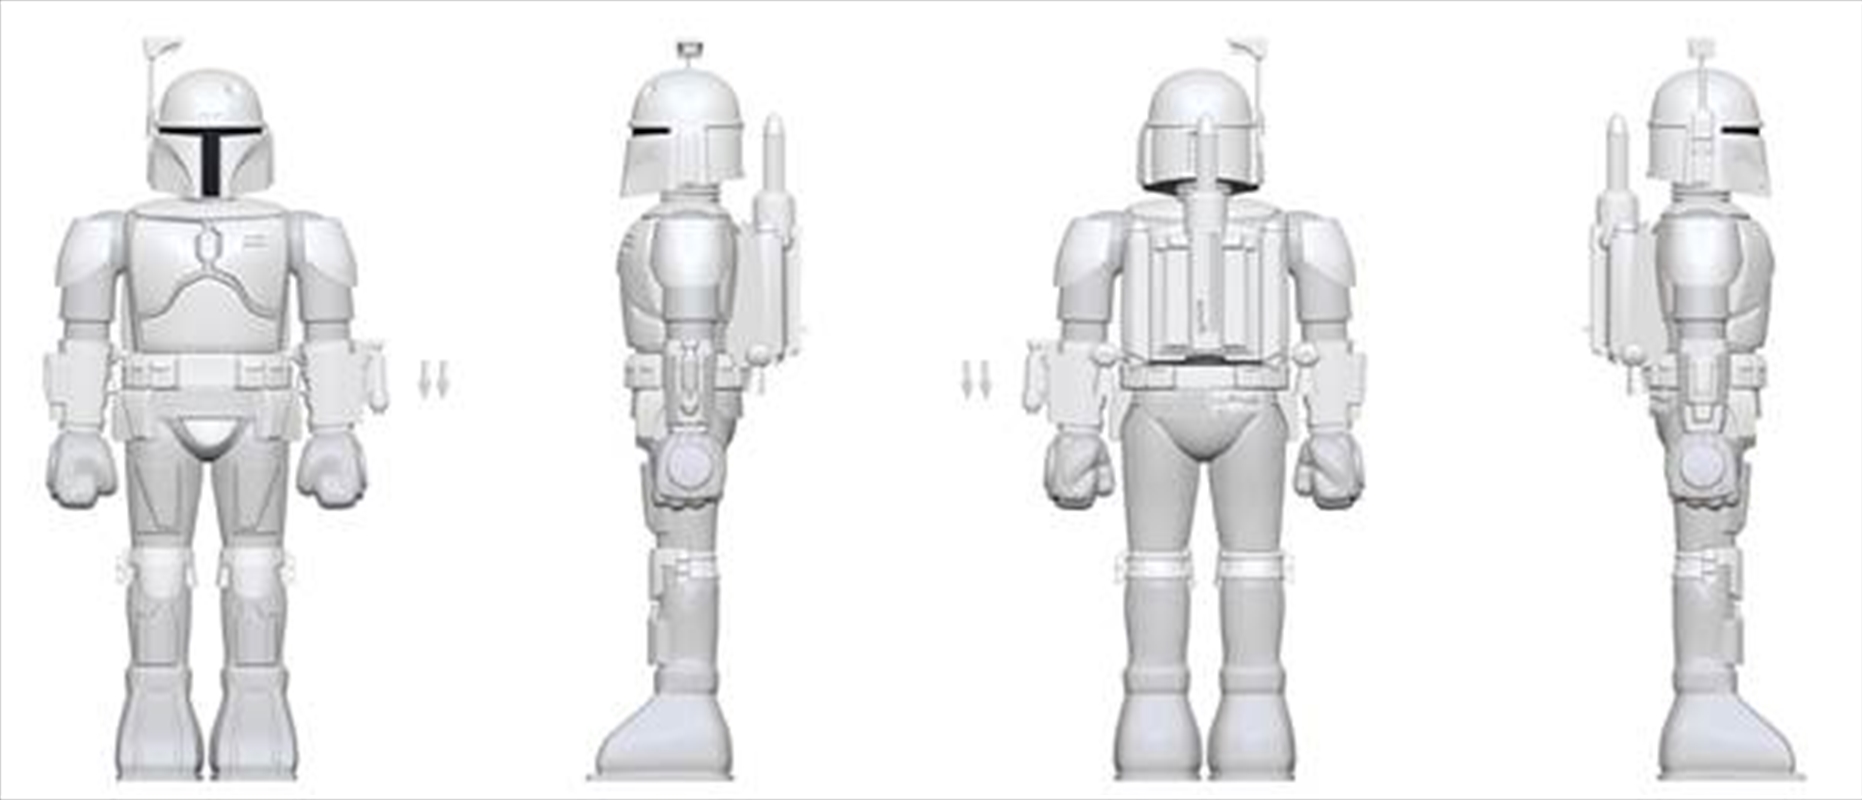 Star Wars - Boba Fett Super Shogun Prototype Figure/Product Detail/Figurines